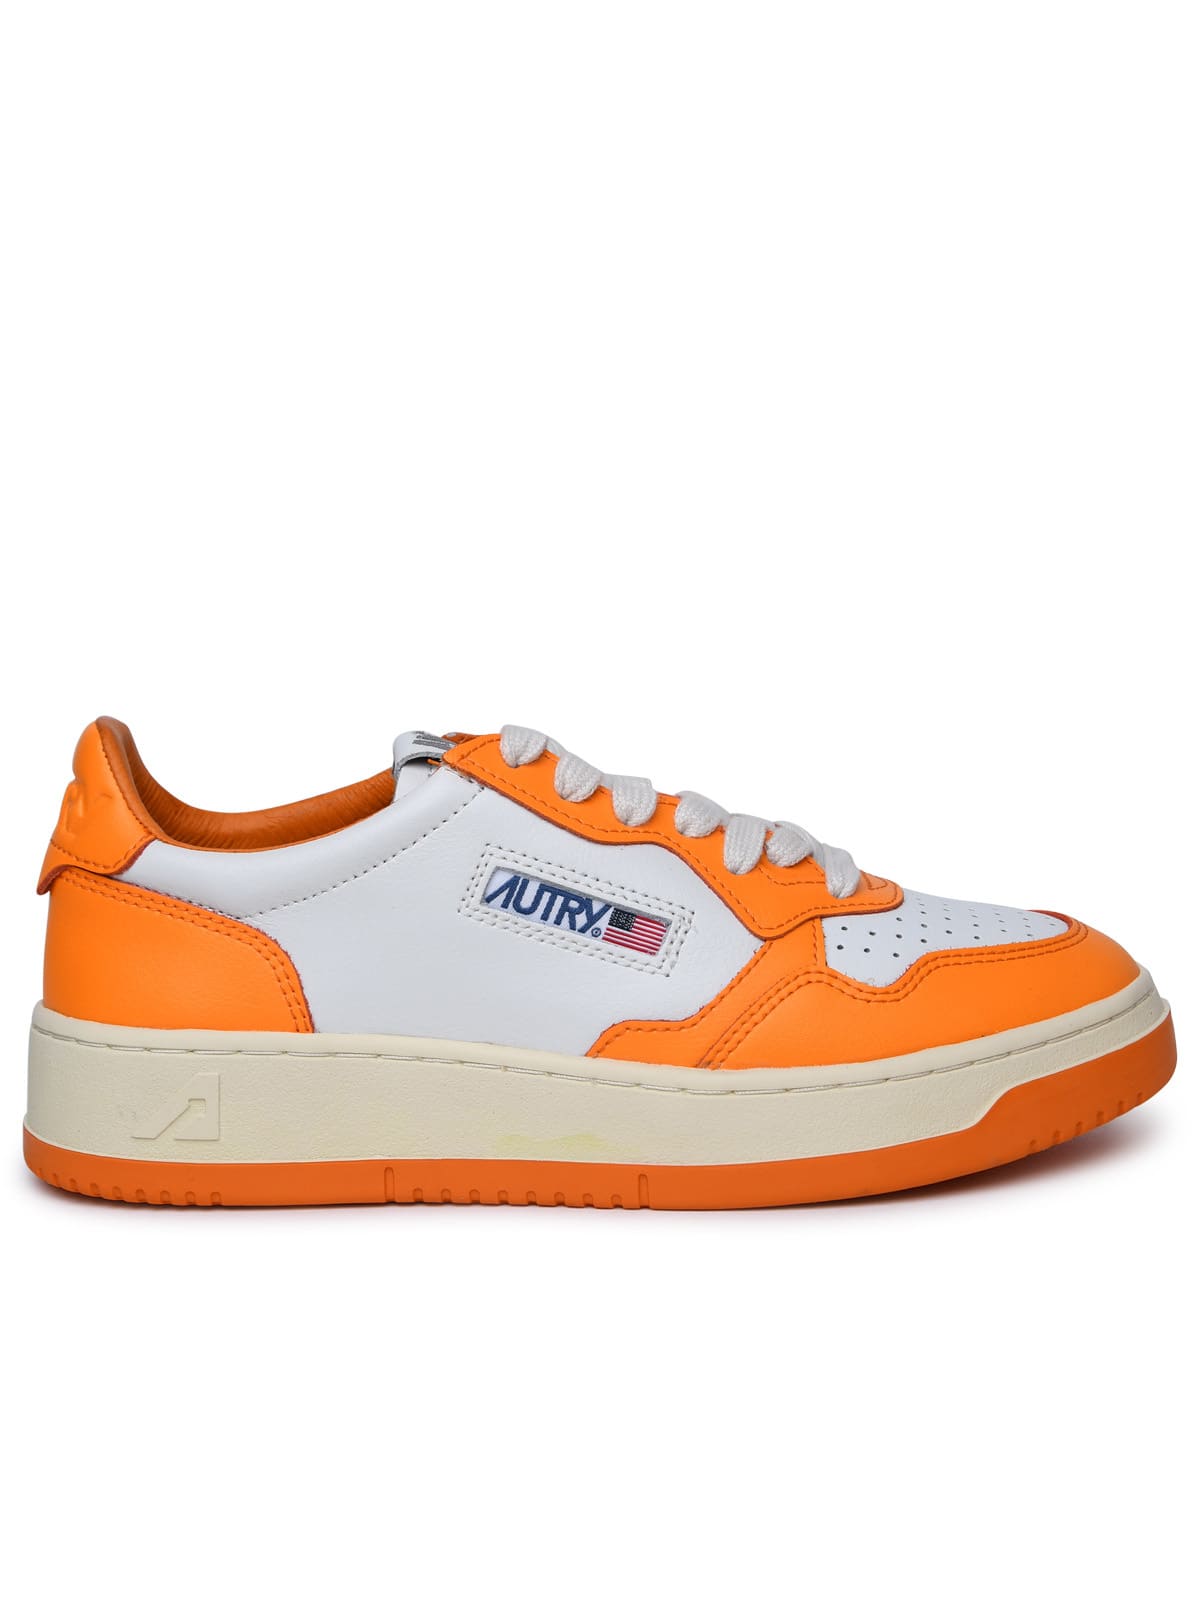 Autry medalist Orange Leather Sneakers